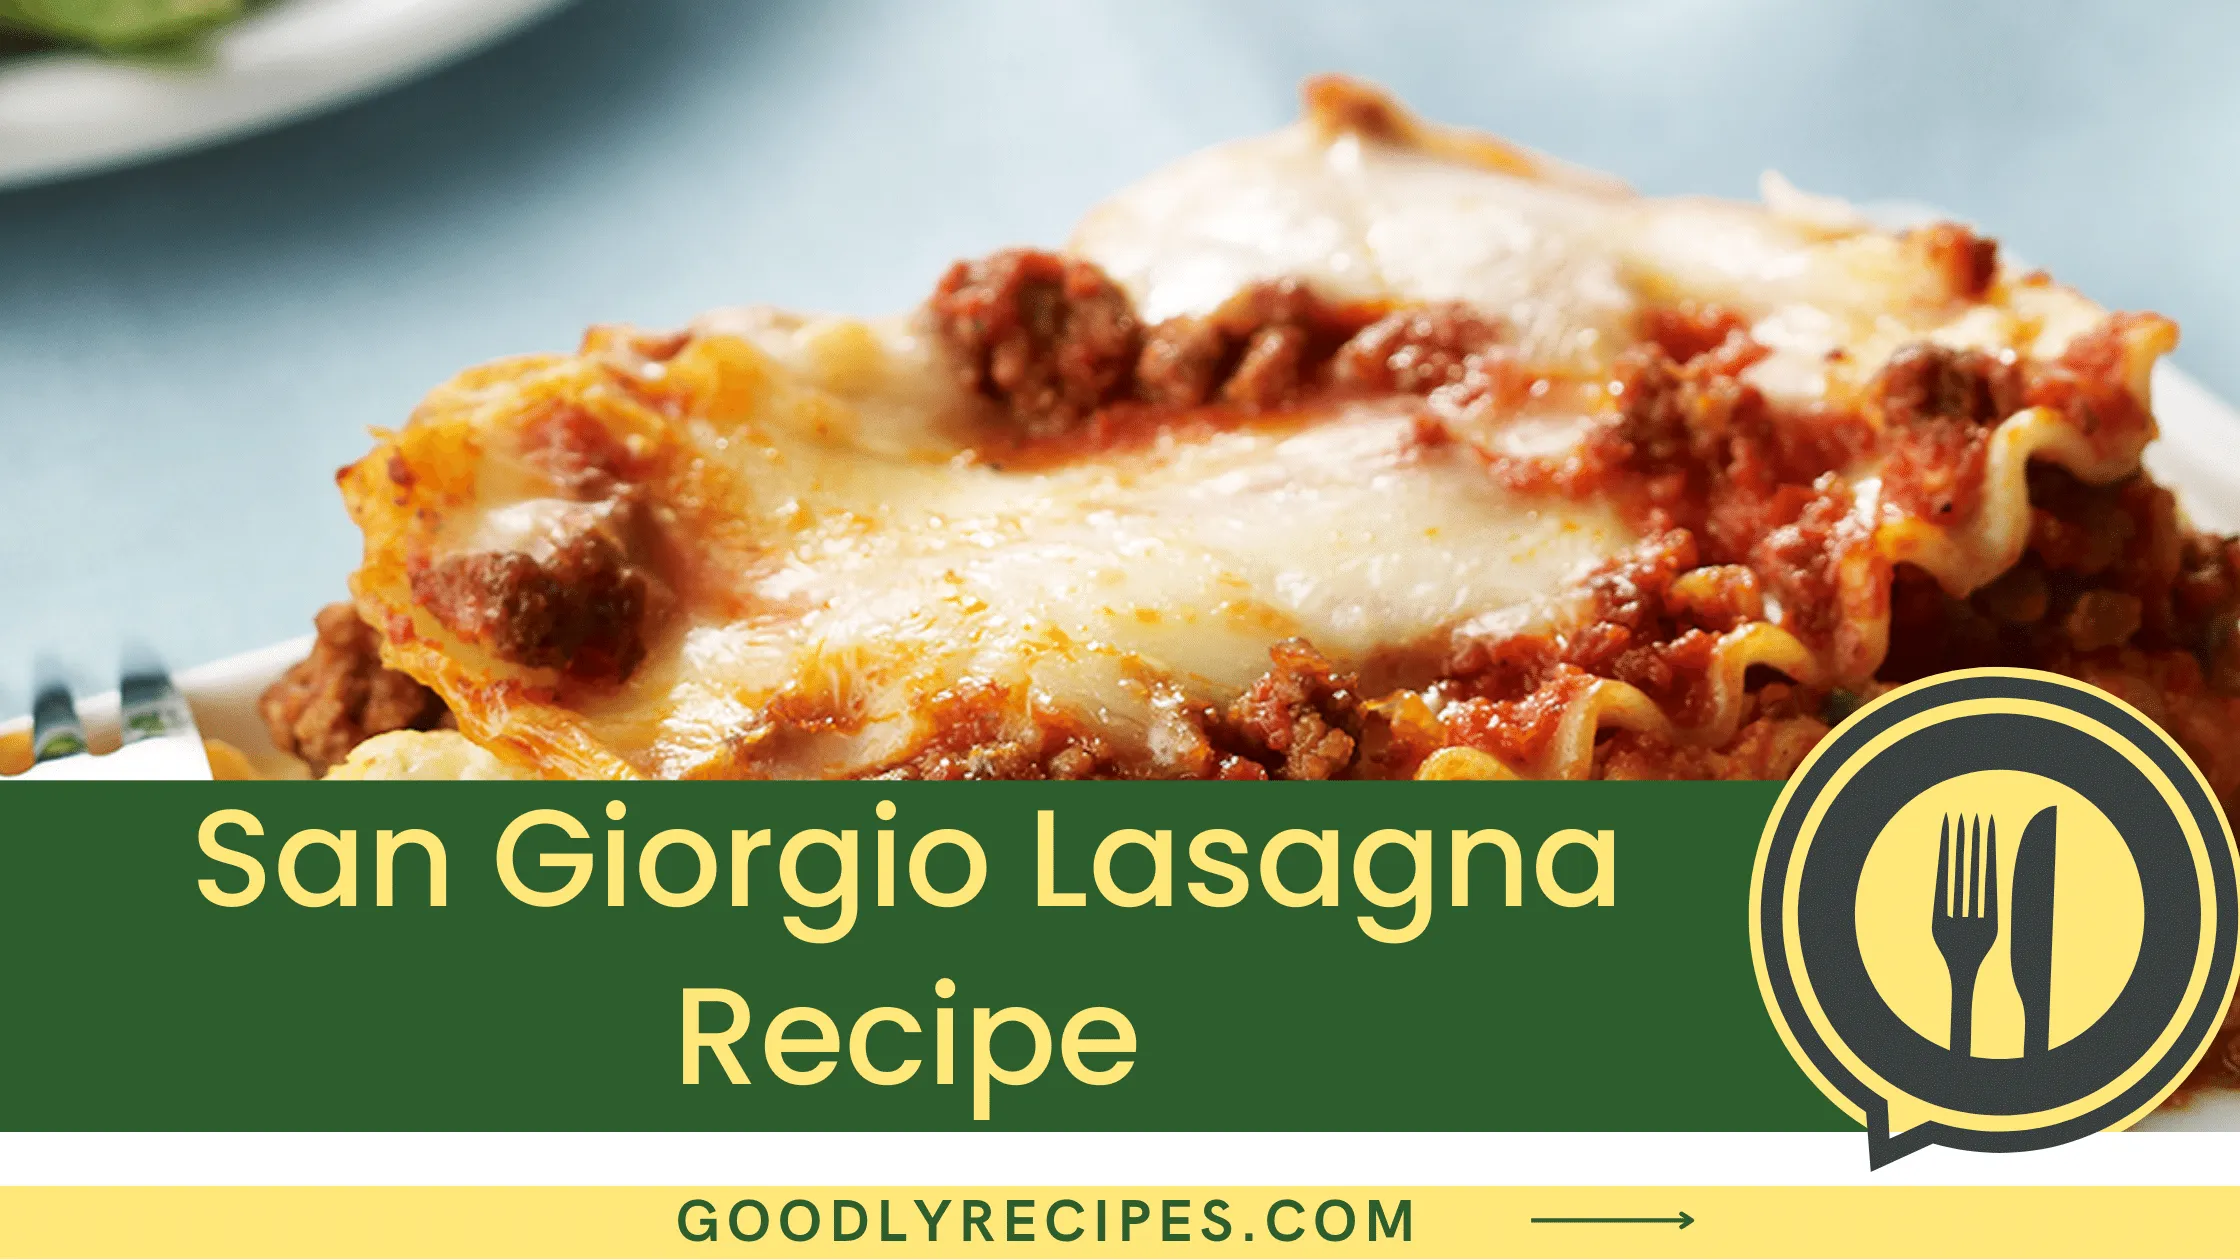 San Giorgio Lasagna Recipe - For Food Lovers